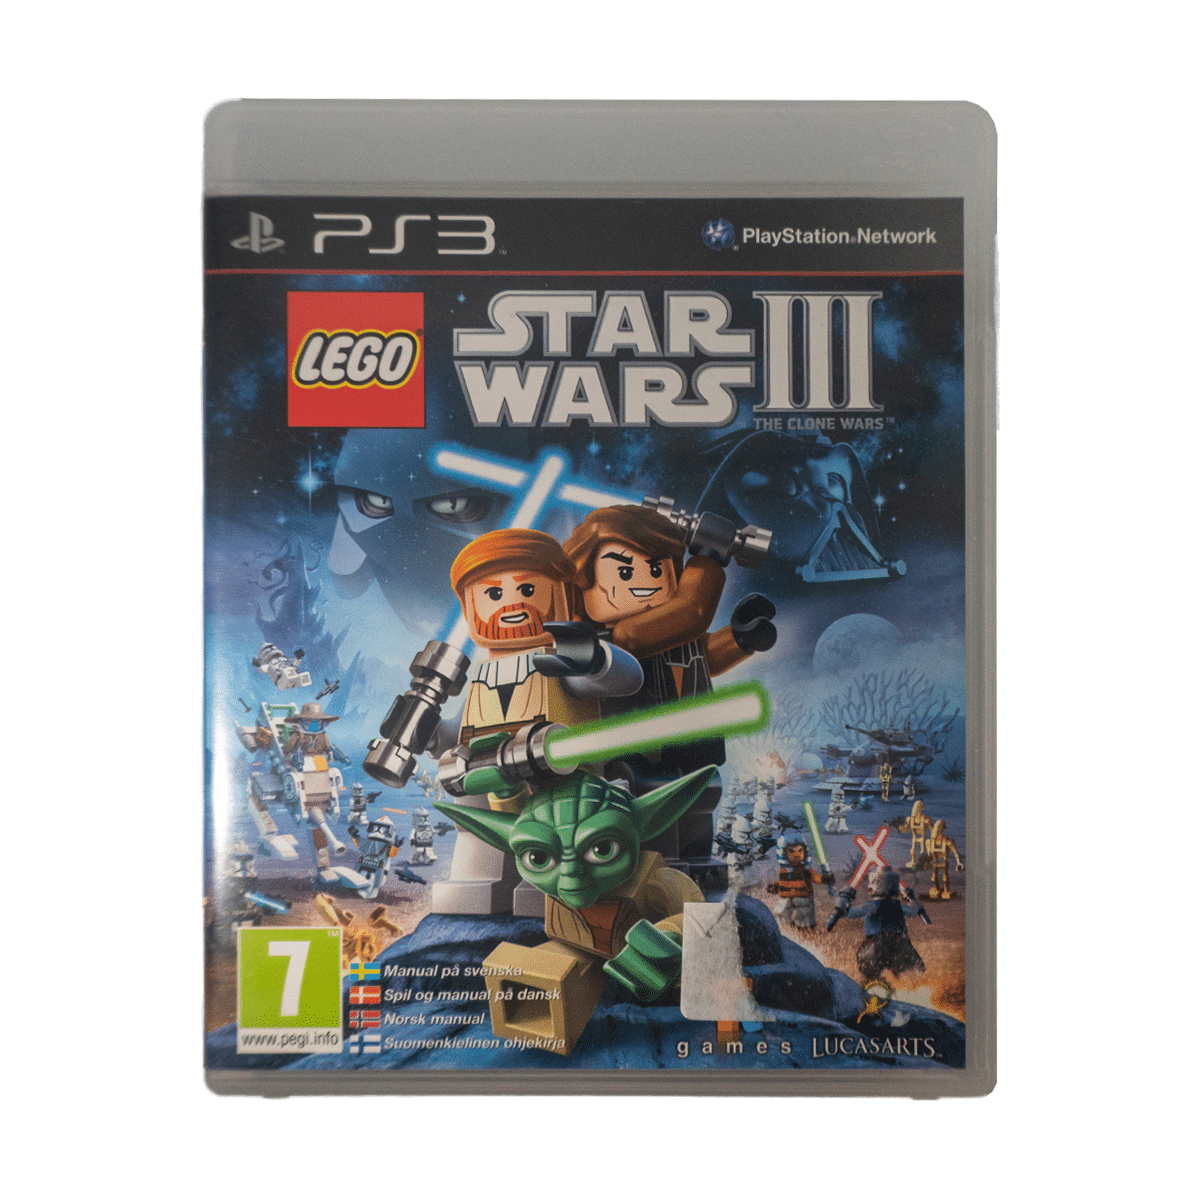 LEGO Star The Clone Wars - PlayStation 3 Spil - Retro